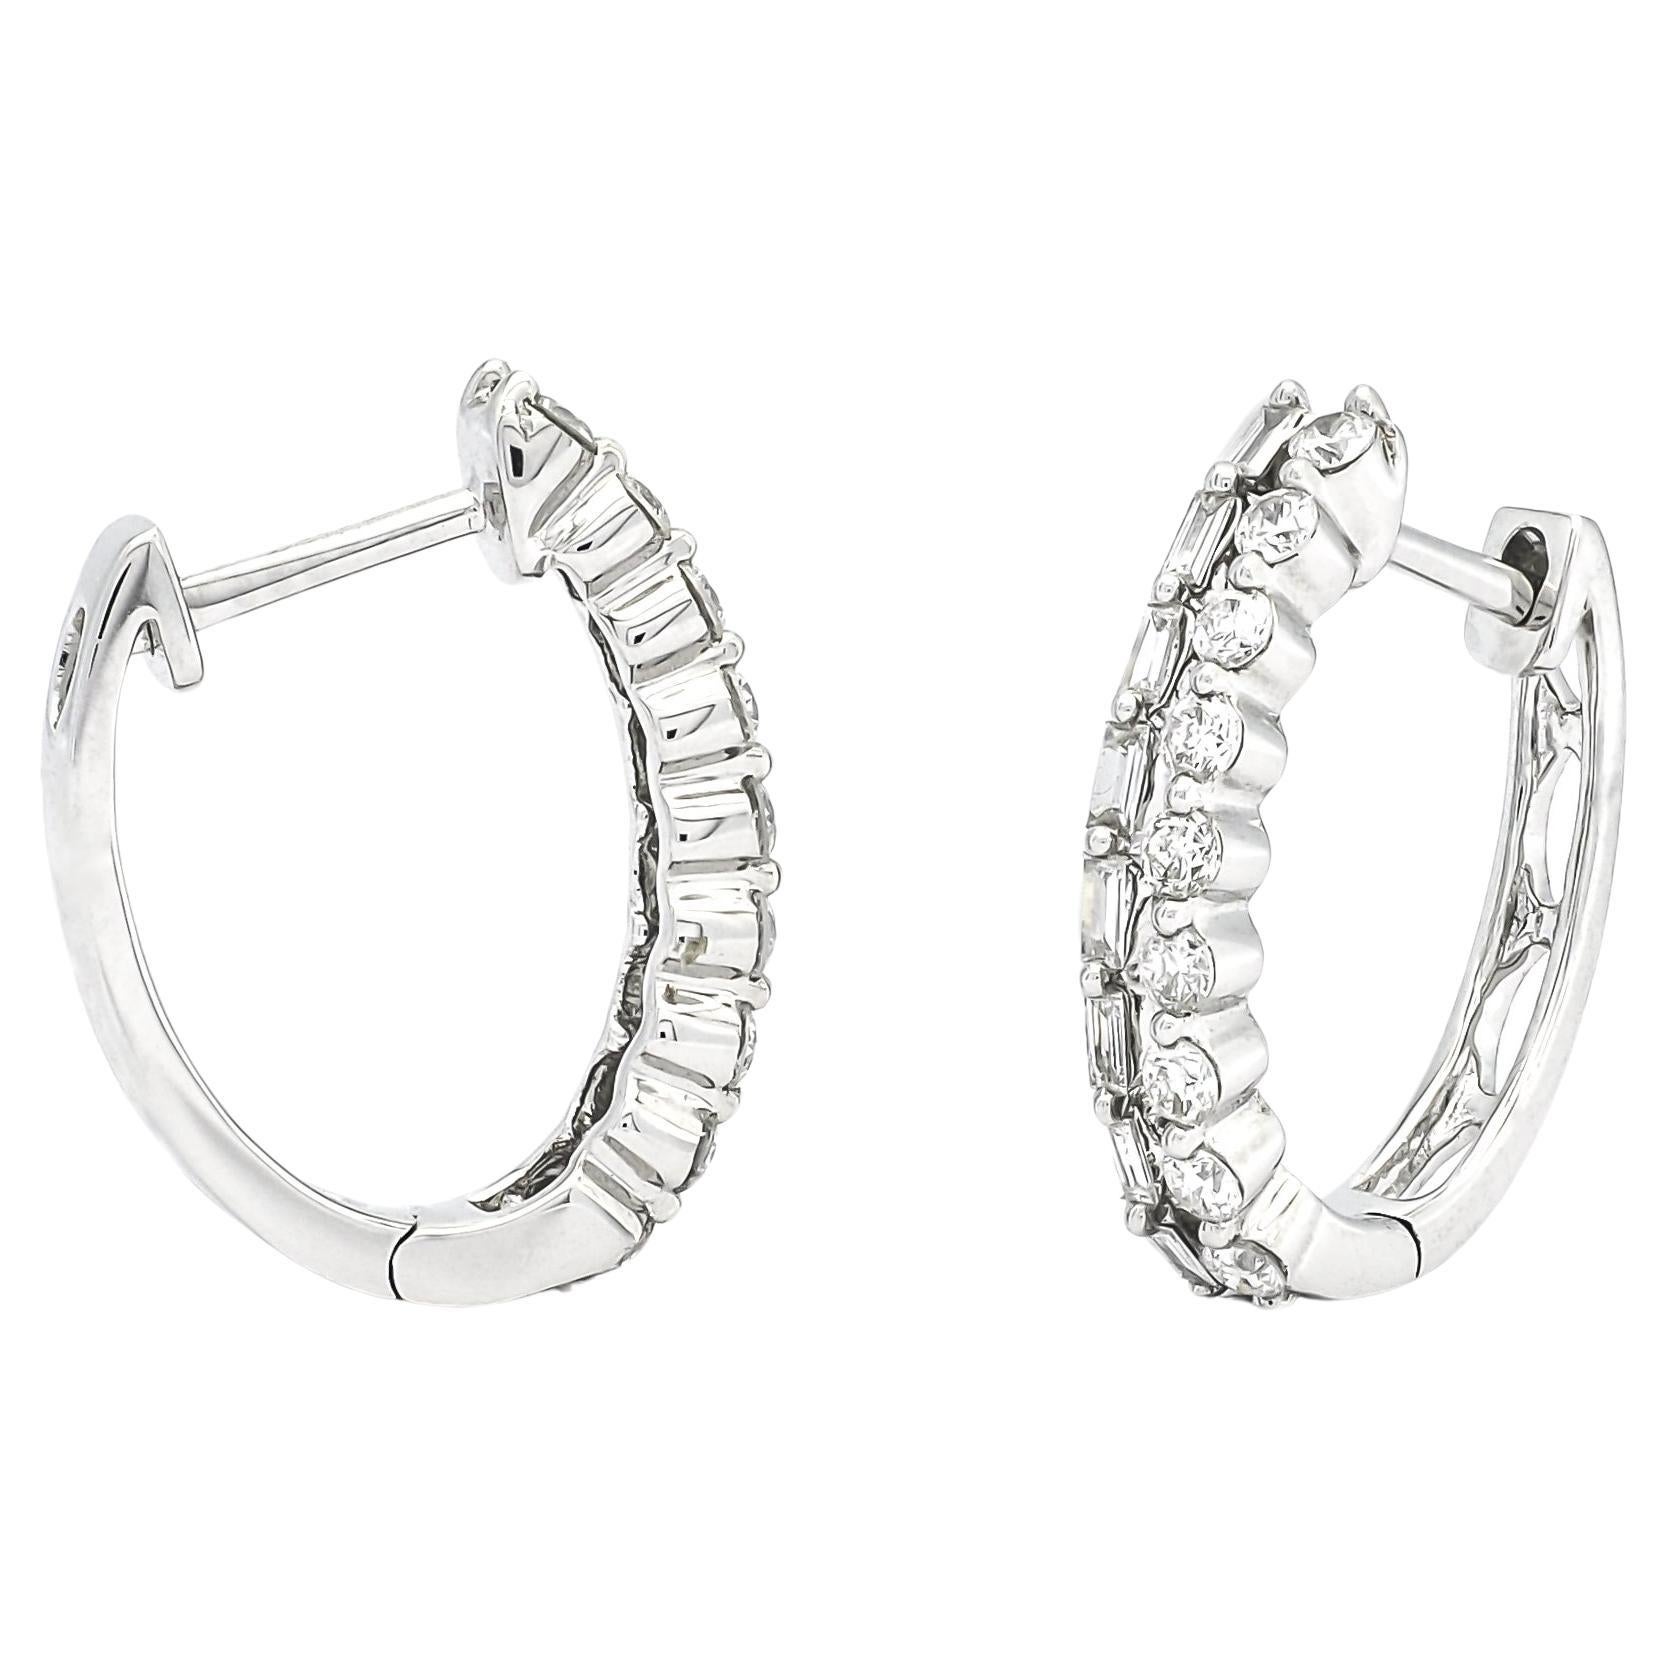 Natural Diamonds 0.62 cts 18 Karat White Gold Petite Hoop Earrings E074197 For Sale